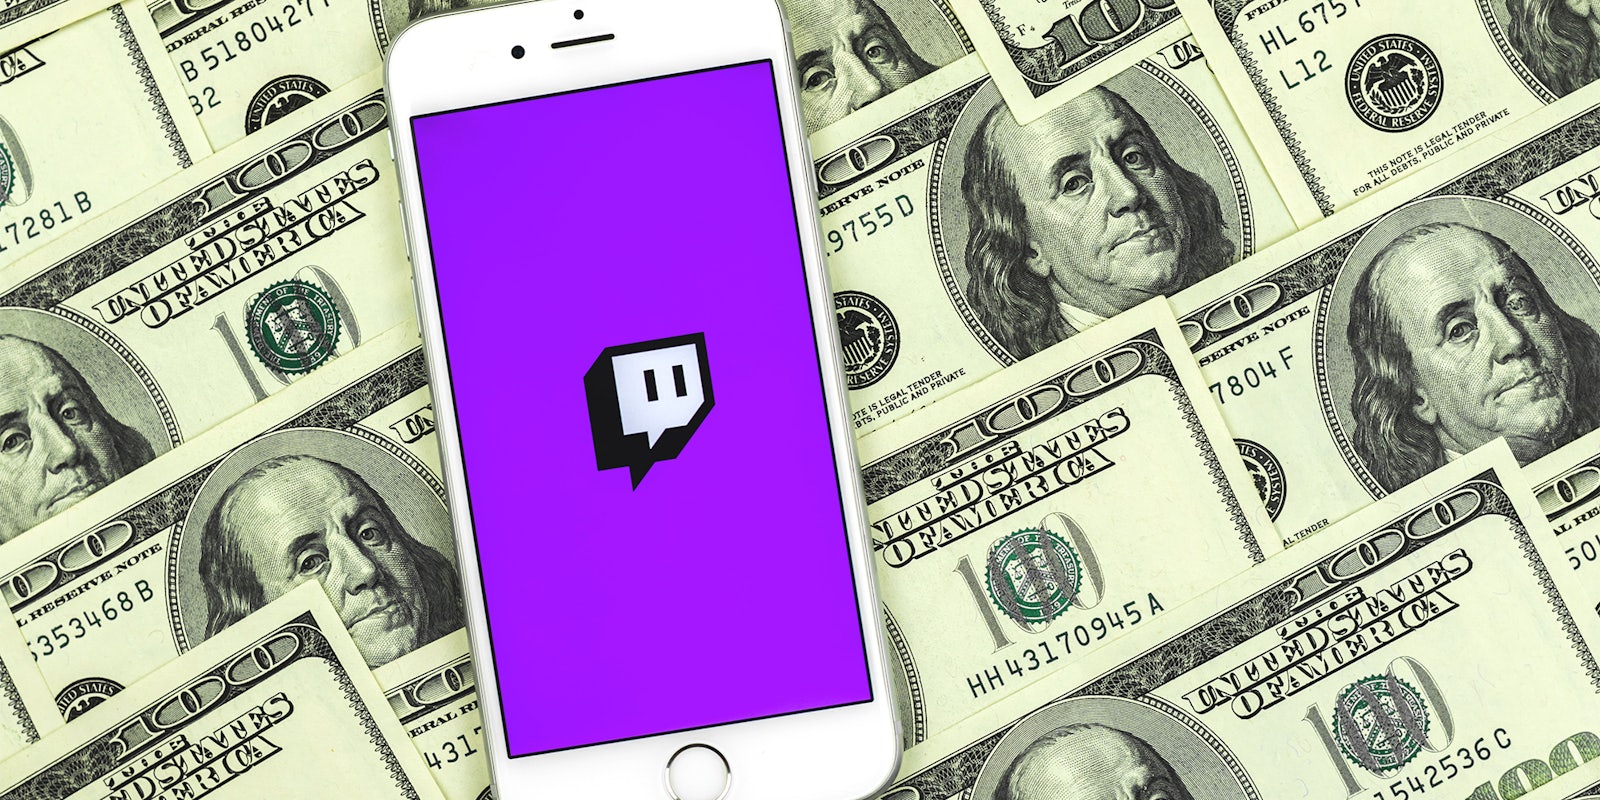 Twitch app on phone over $100 bills